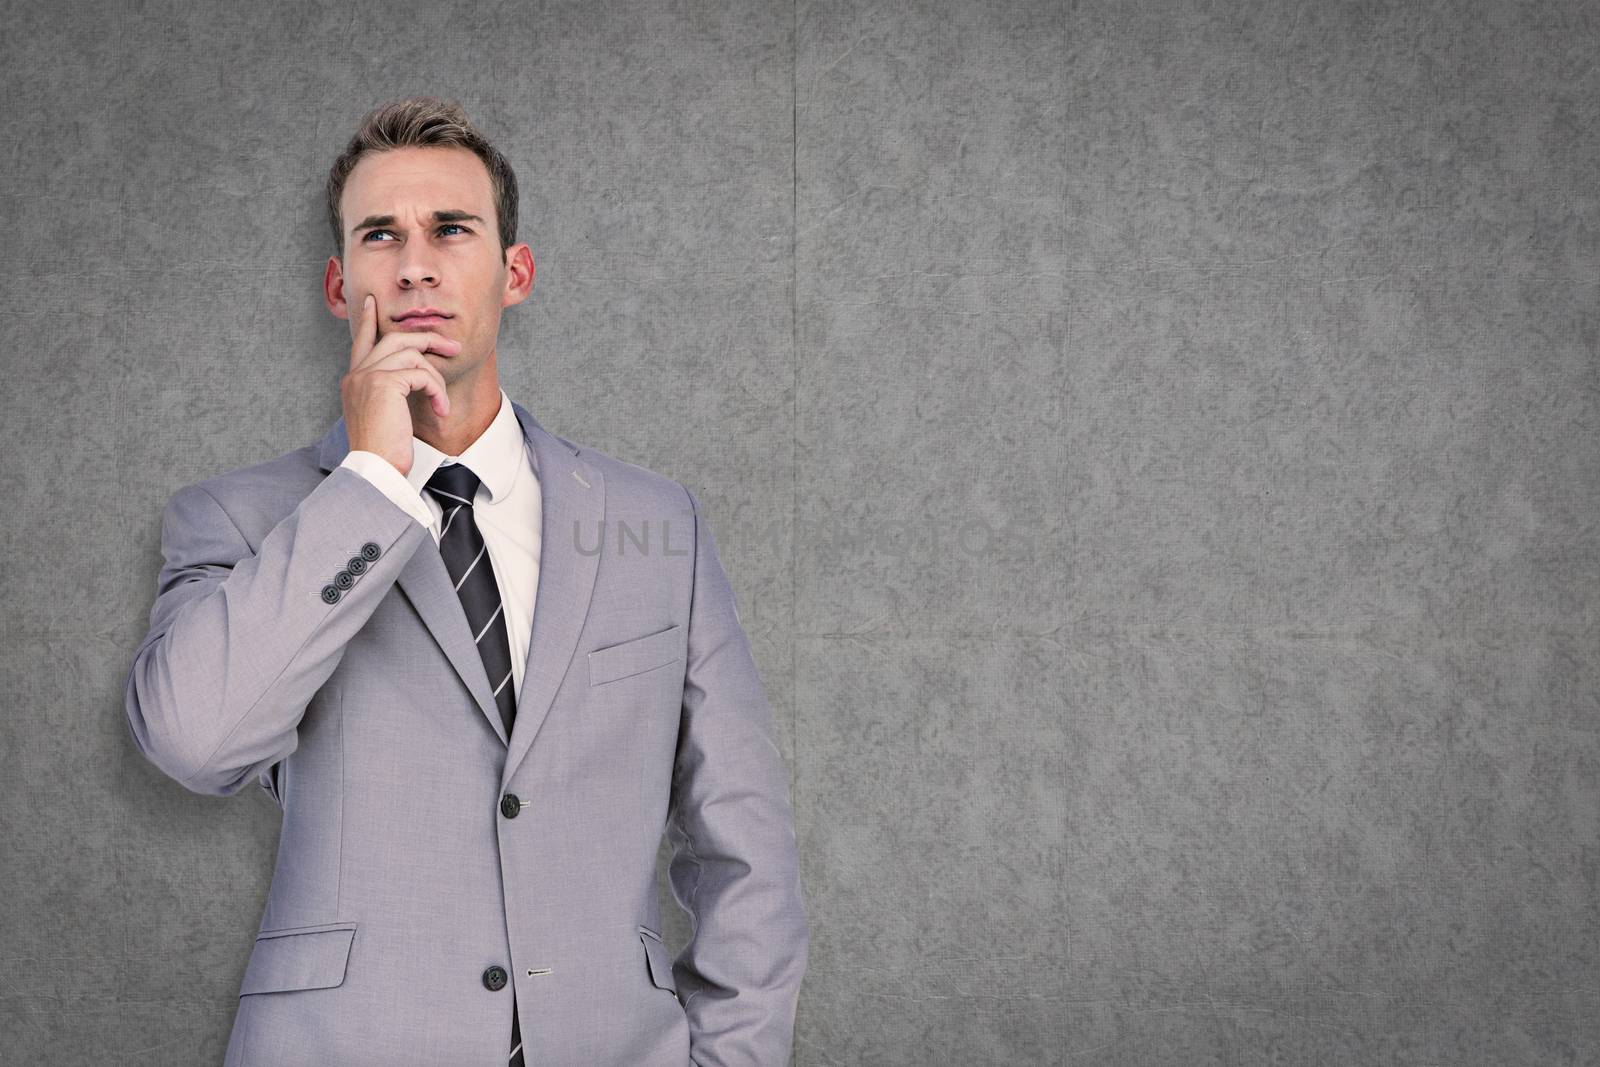 Businessman thinking against grey background